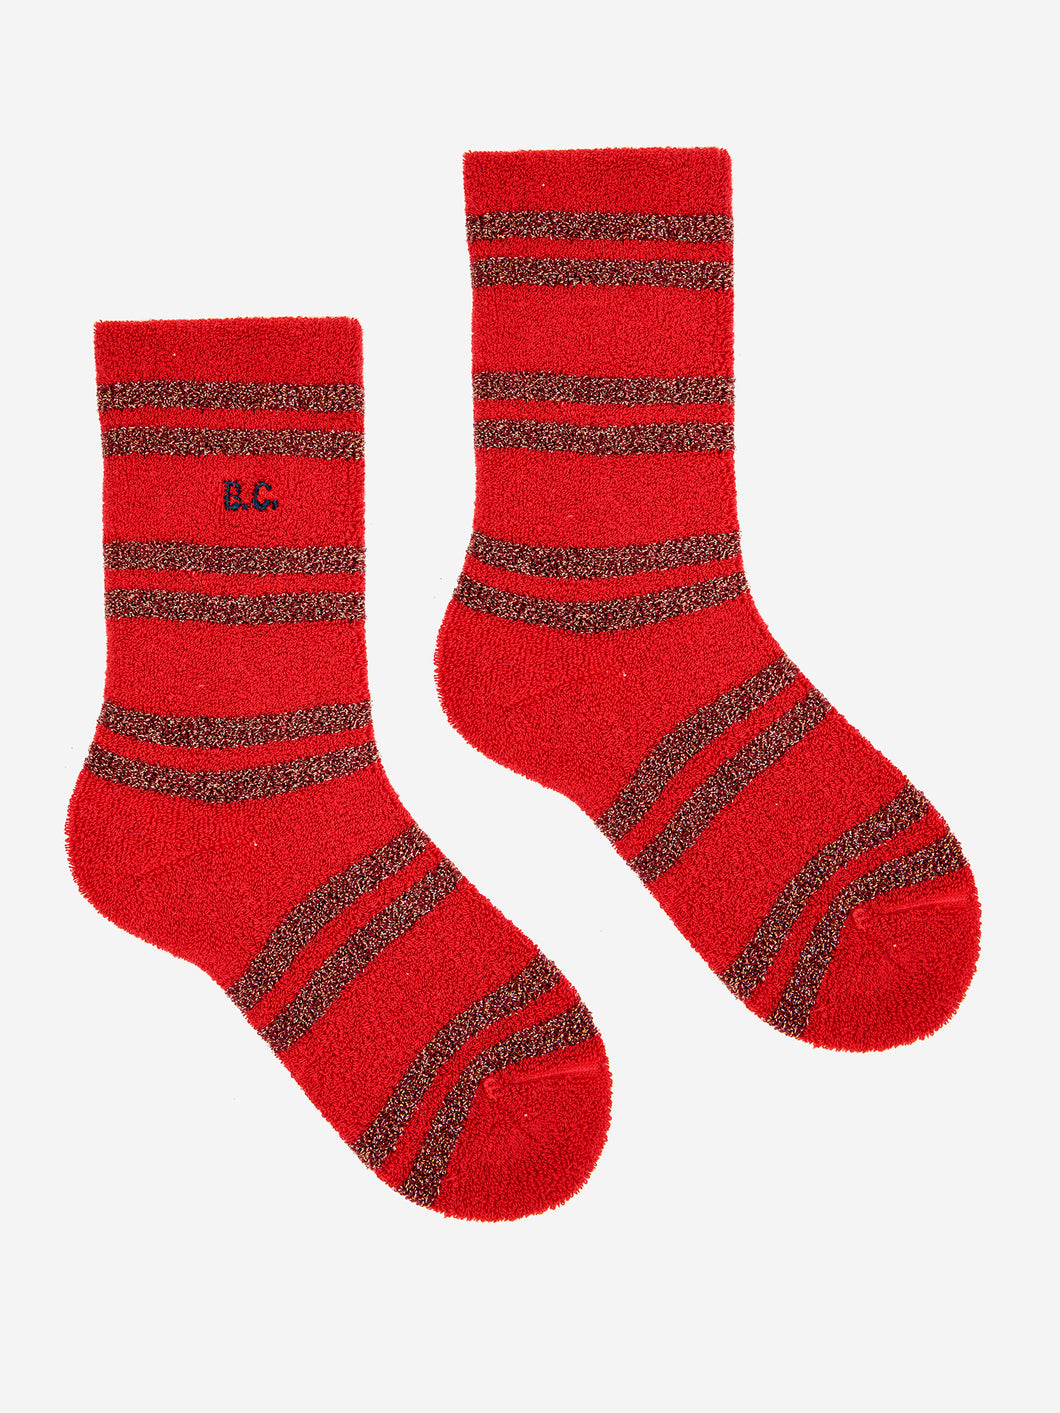 Bobo Choses / FUN / KID / Lurex Thick Socks / Red Striped